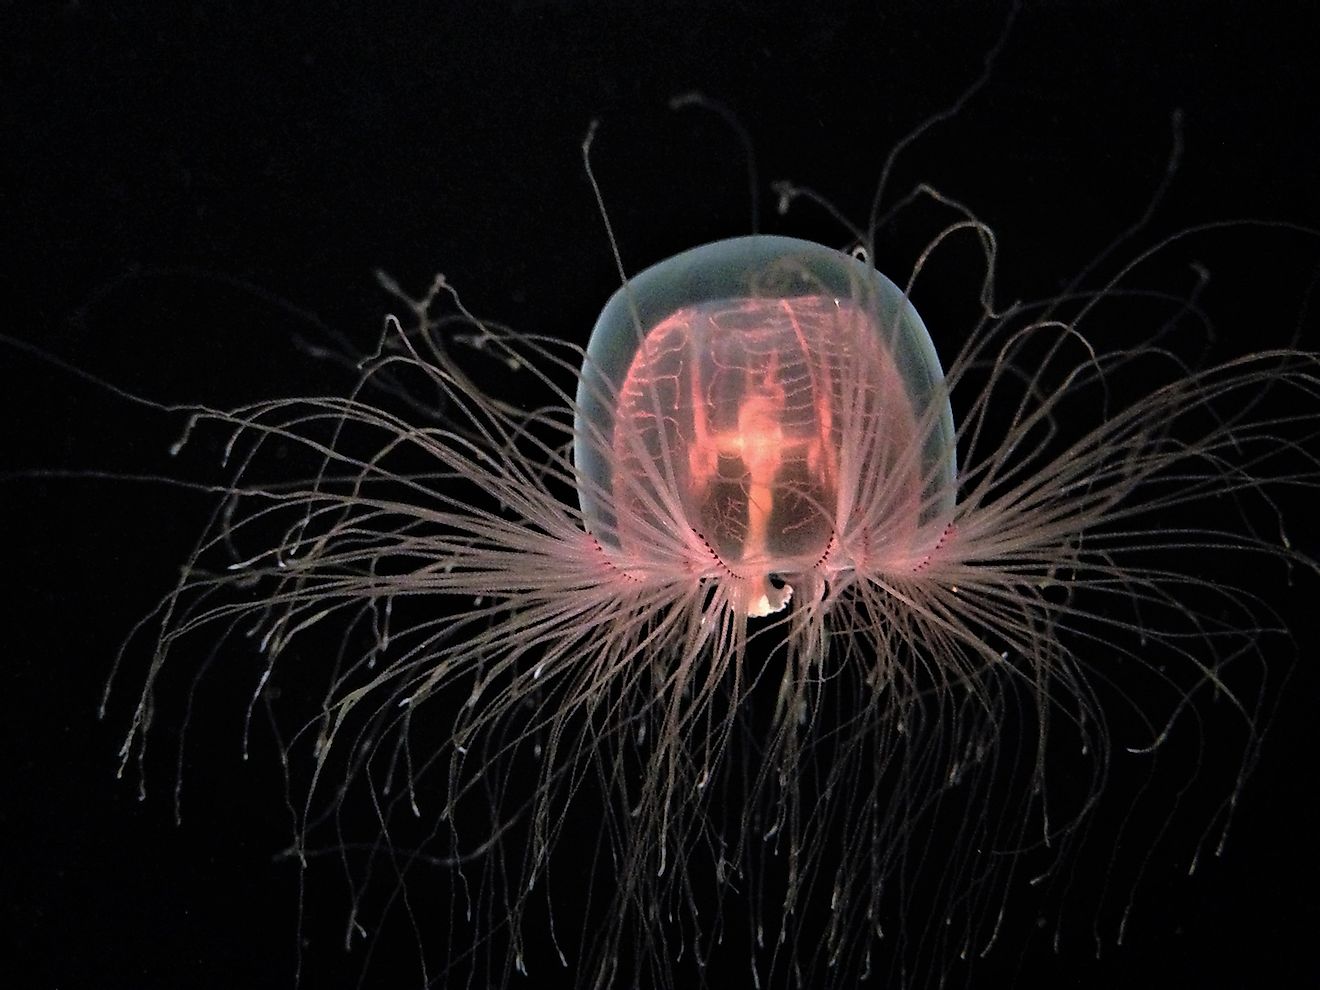 An transparent jellyfish. Image credit: Rebecca Schreiner/Shutterstock.com